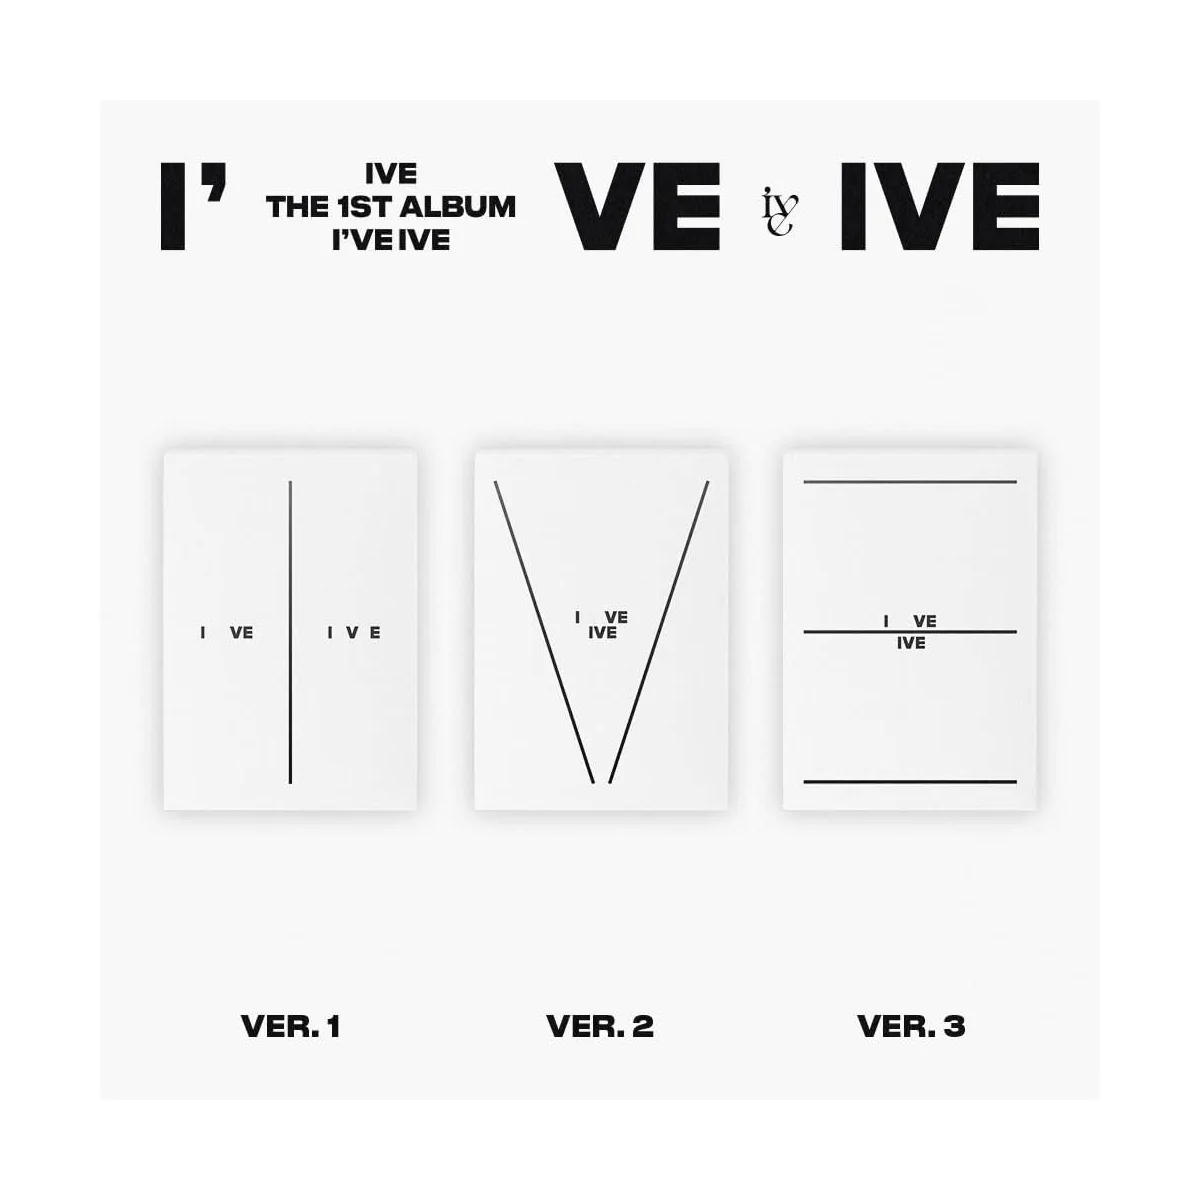 IVE - I've IVE (Version 1) (1st Album) 